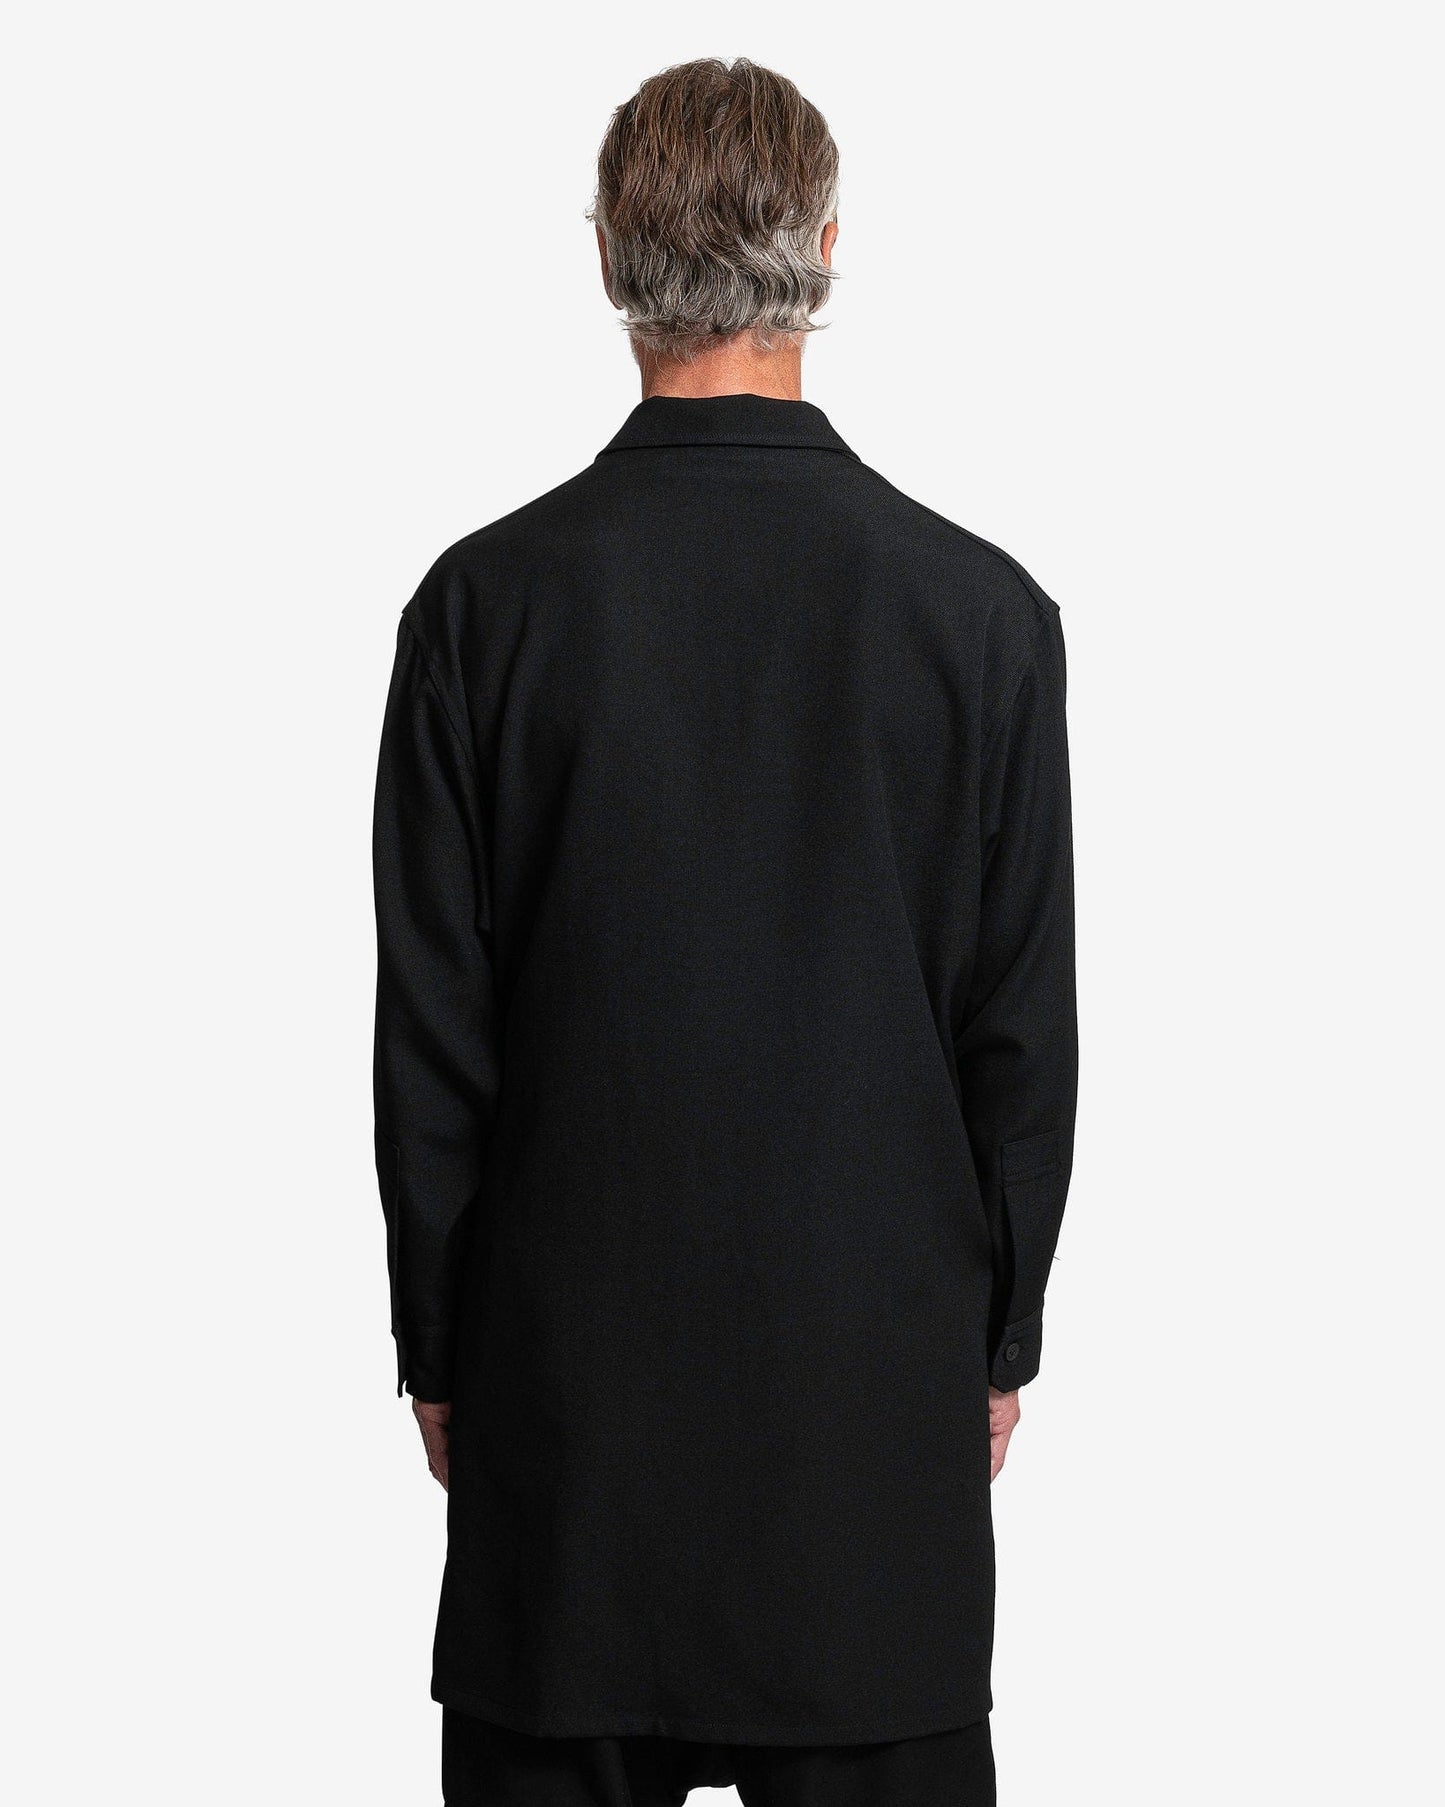 Yohji Yamamoto Pour Homme Men's Shirts Army Gabardine Open Collar in Black